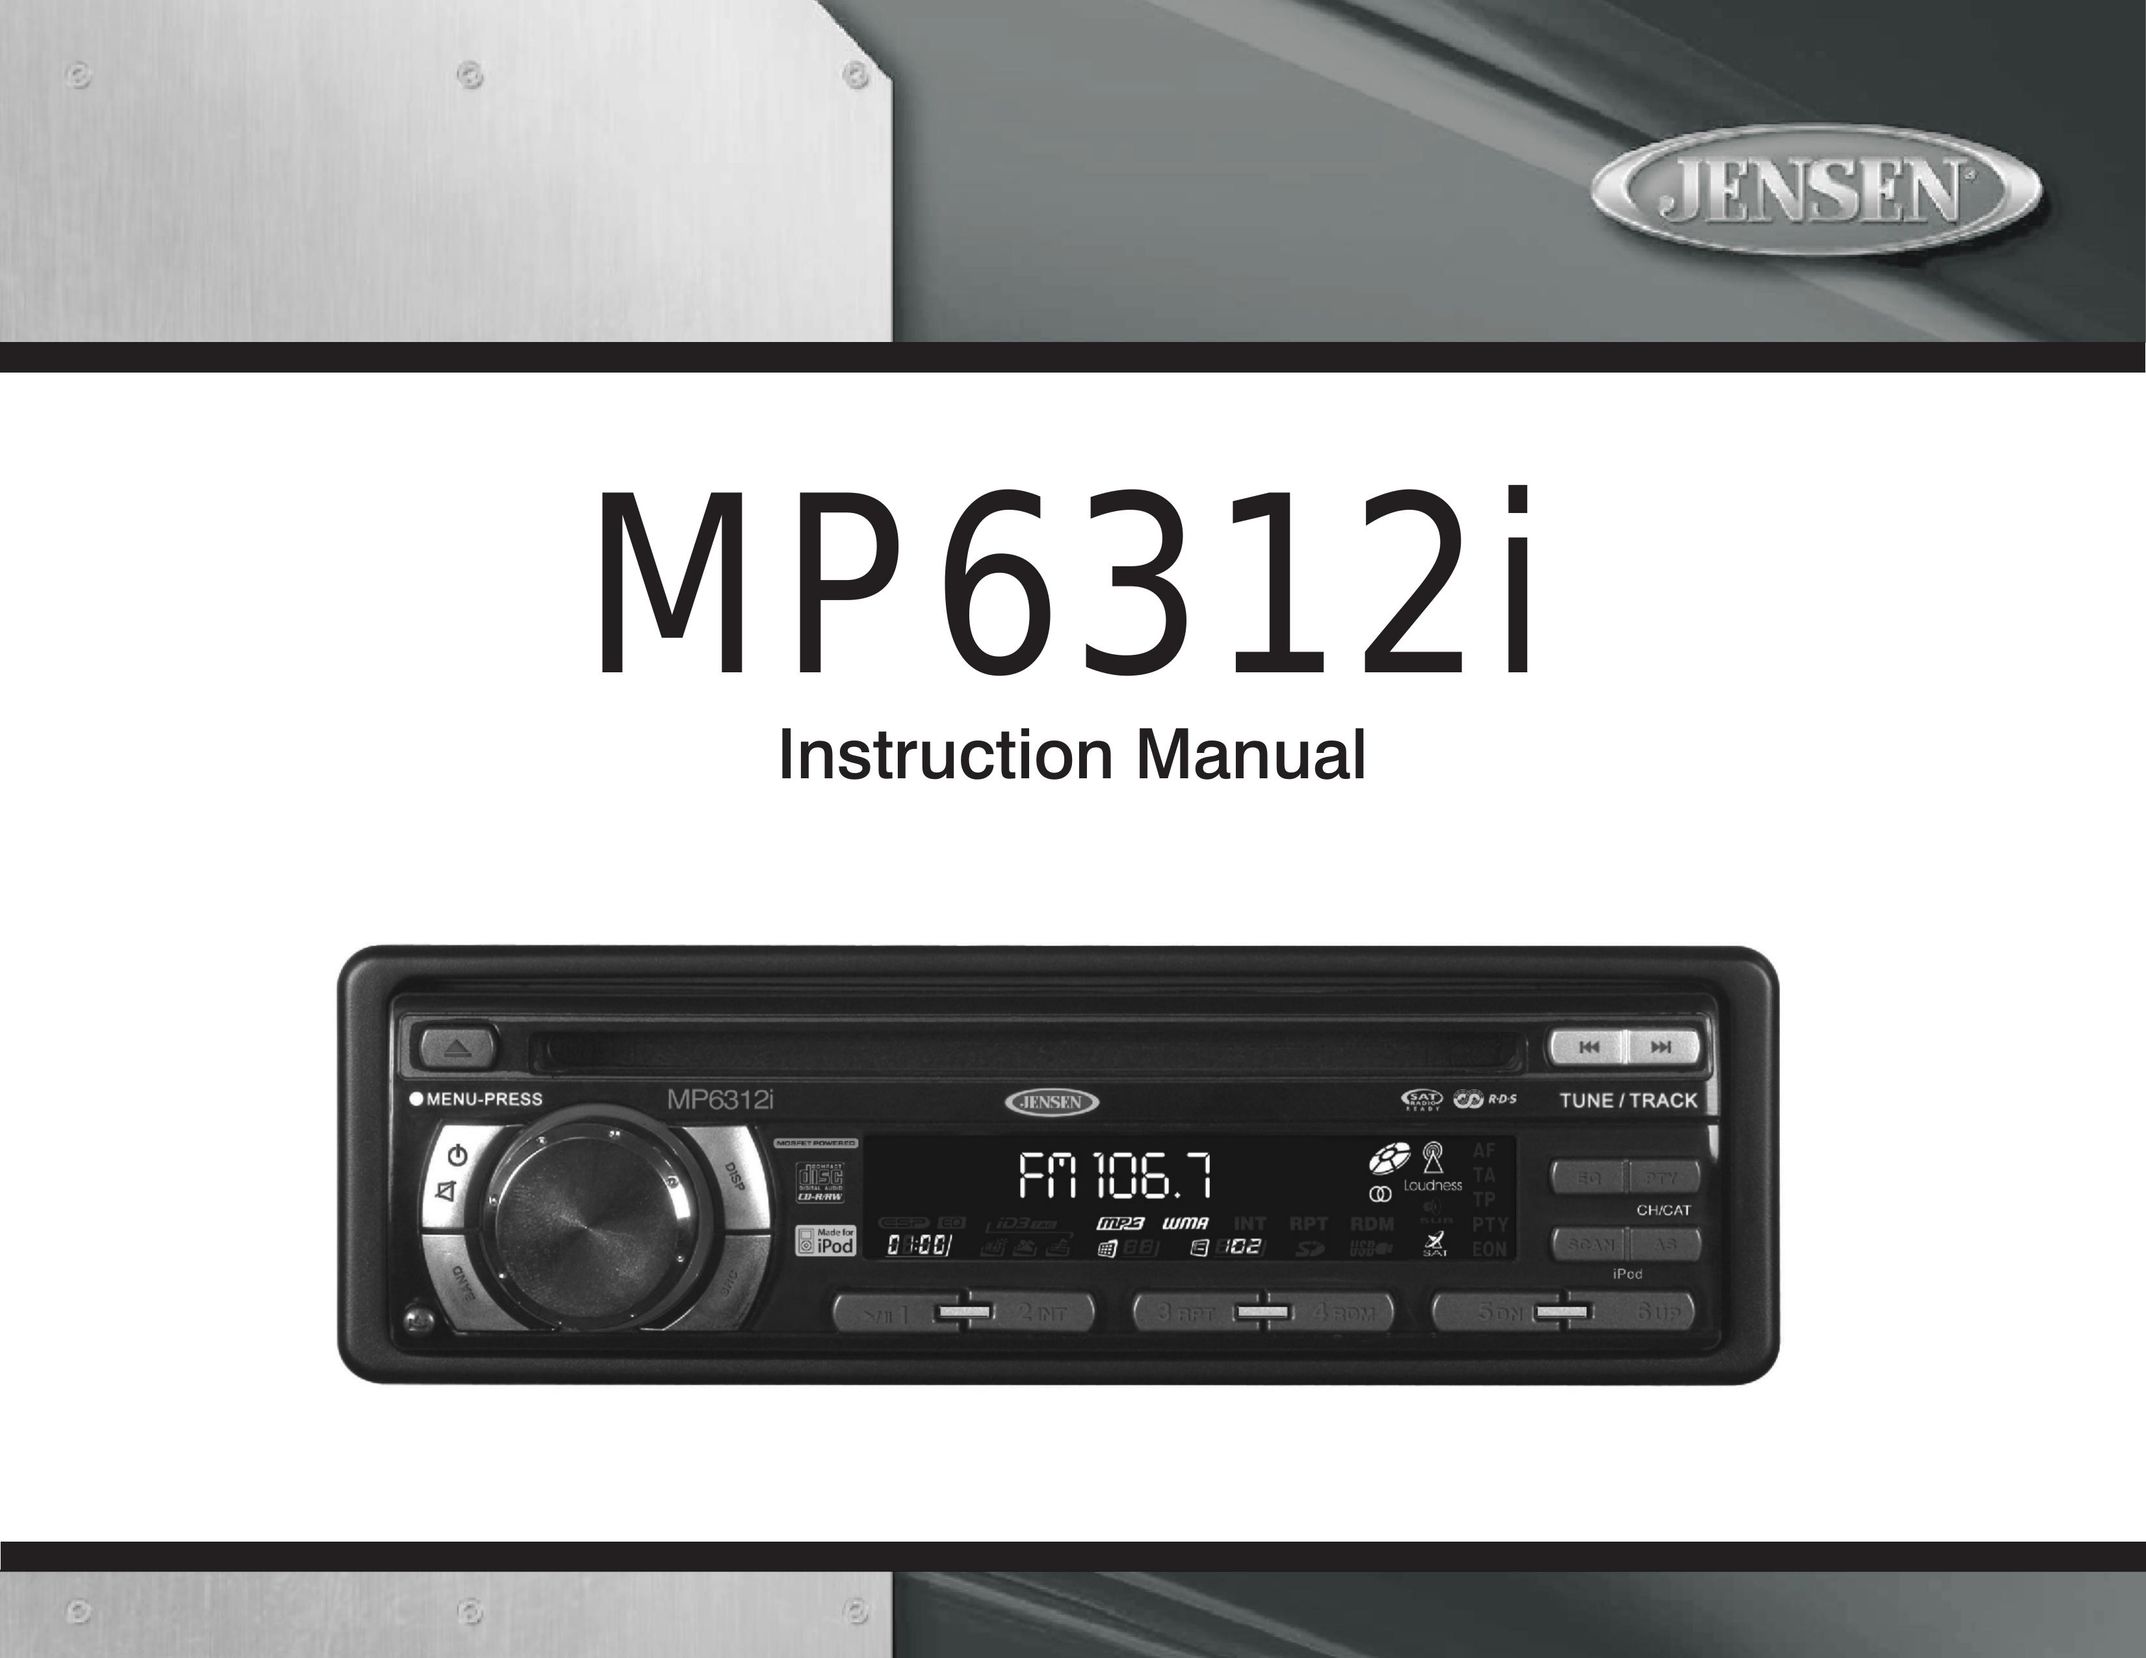 Jensen Tools MP6312 Portable Radio User Manual